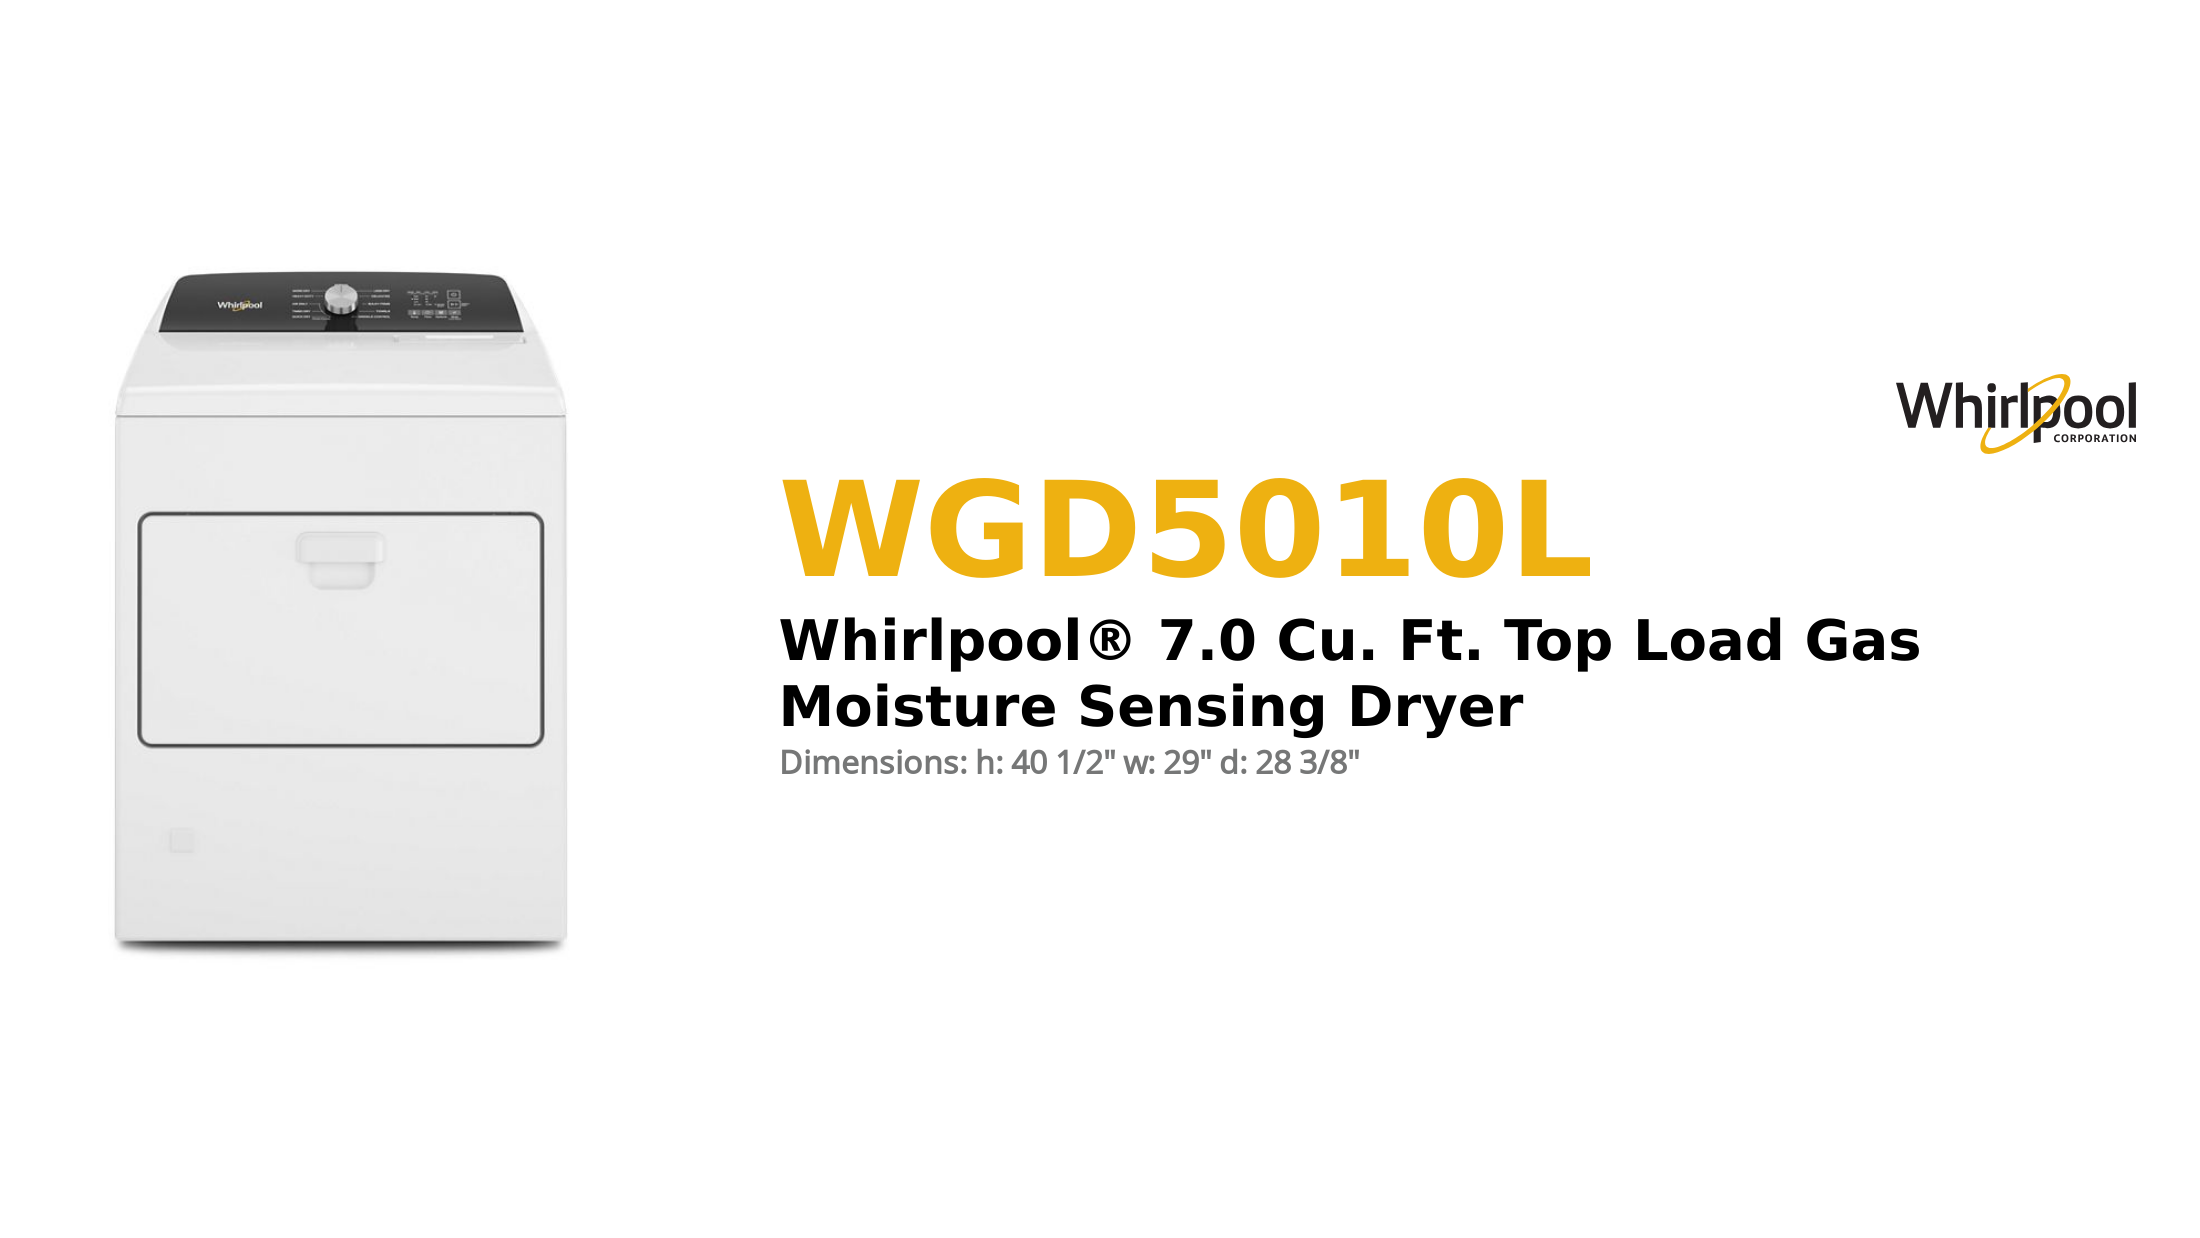 Whirlpool® 7.0 Cu. Ft. Top Load Gas Moisture Sensing Dryer